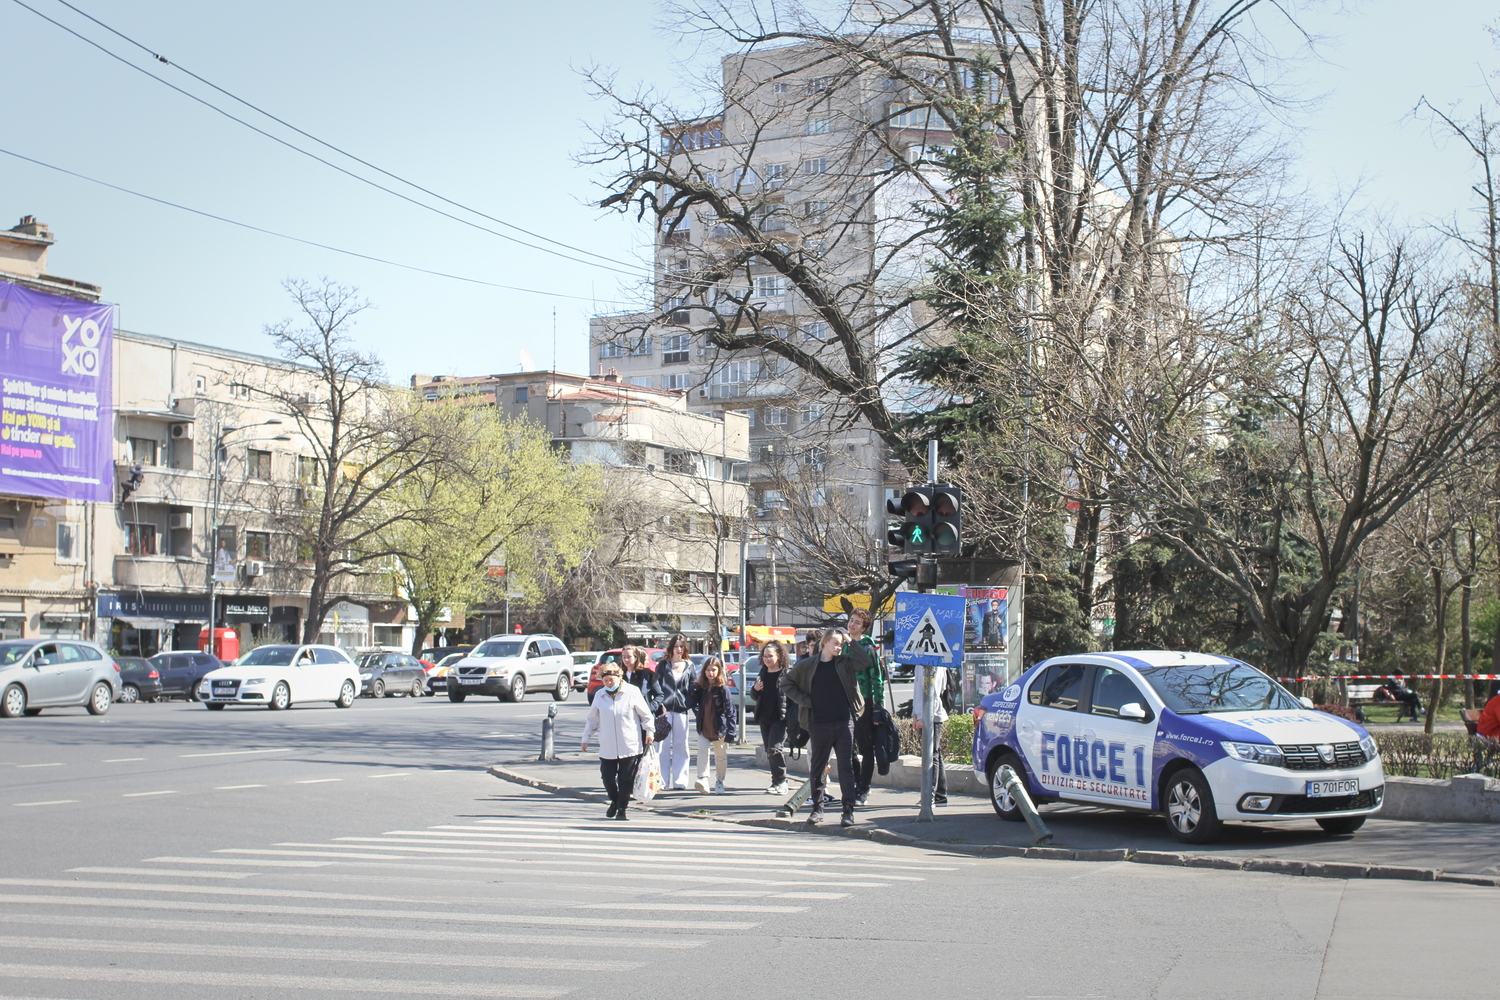 Piata Dorobantilor à Bucarest, où Marine descend du bus. © Globe Reporters